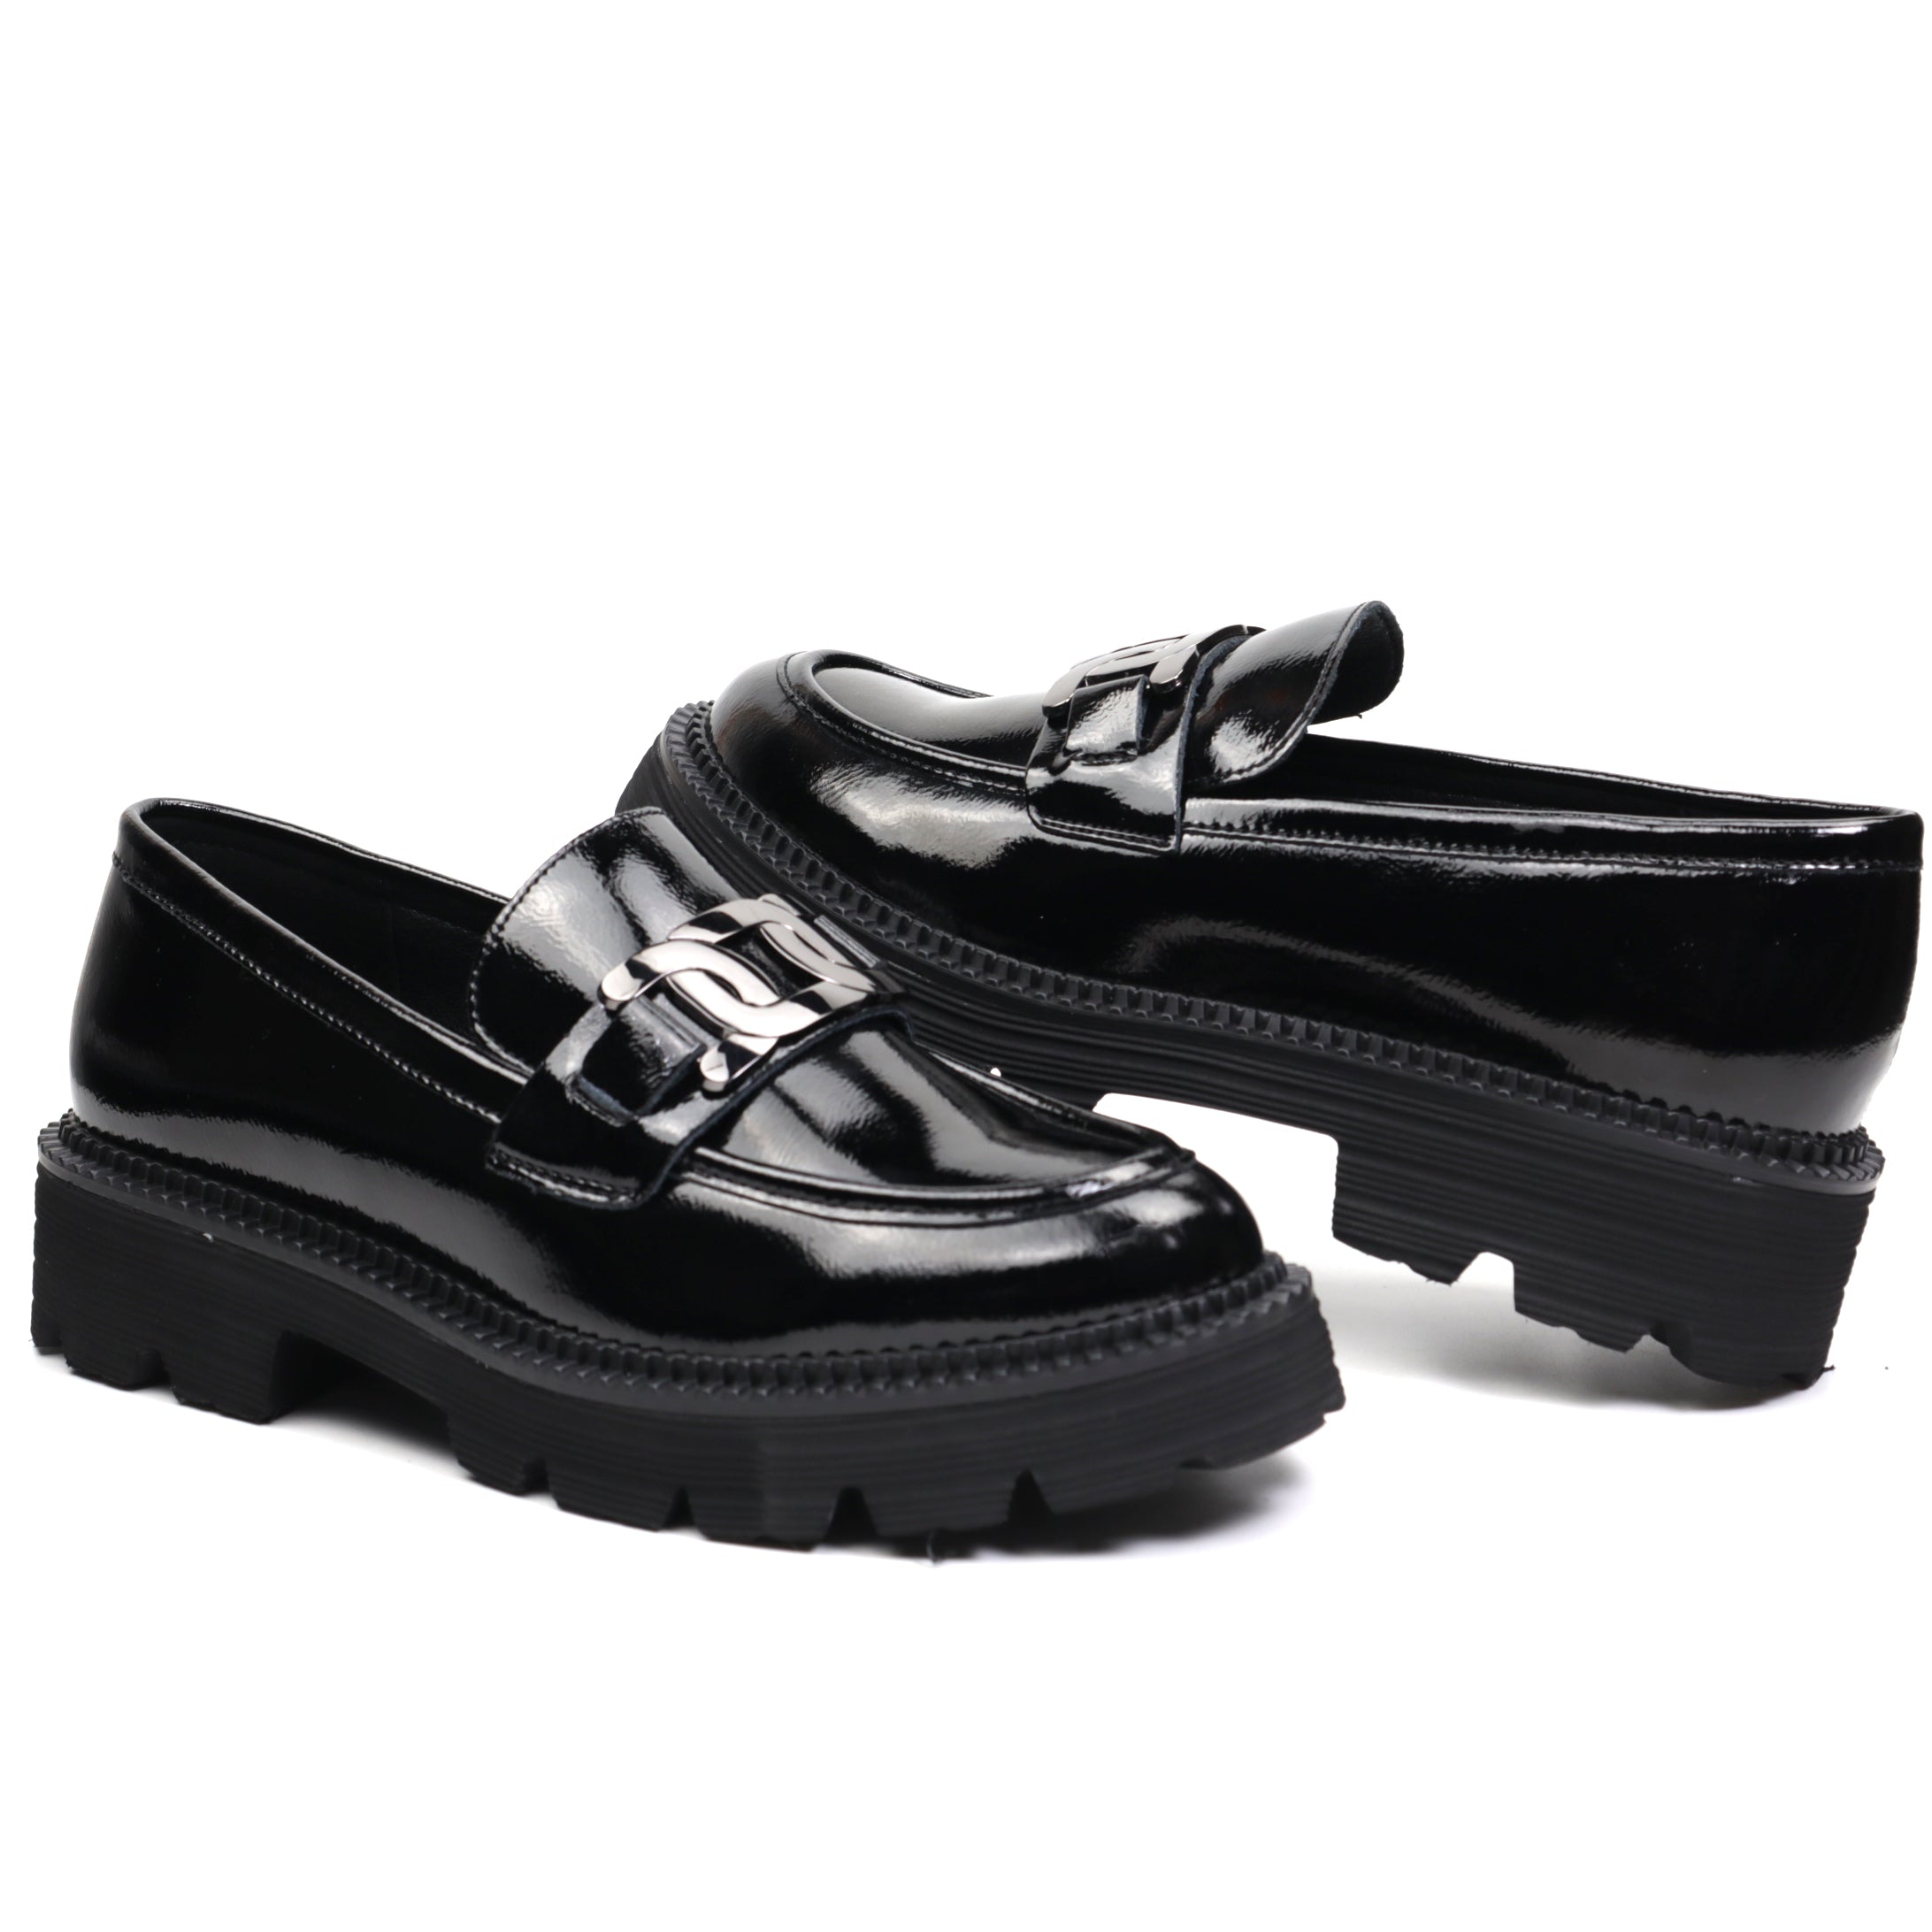 Pass Collection Pantofi dama V4VA30039 01 L negru lac ID3641-NGL